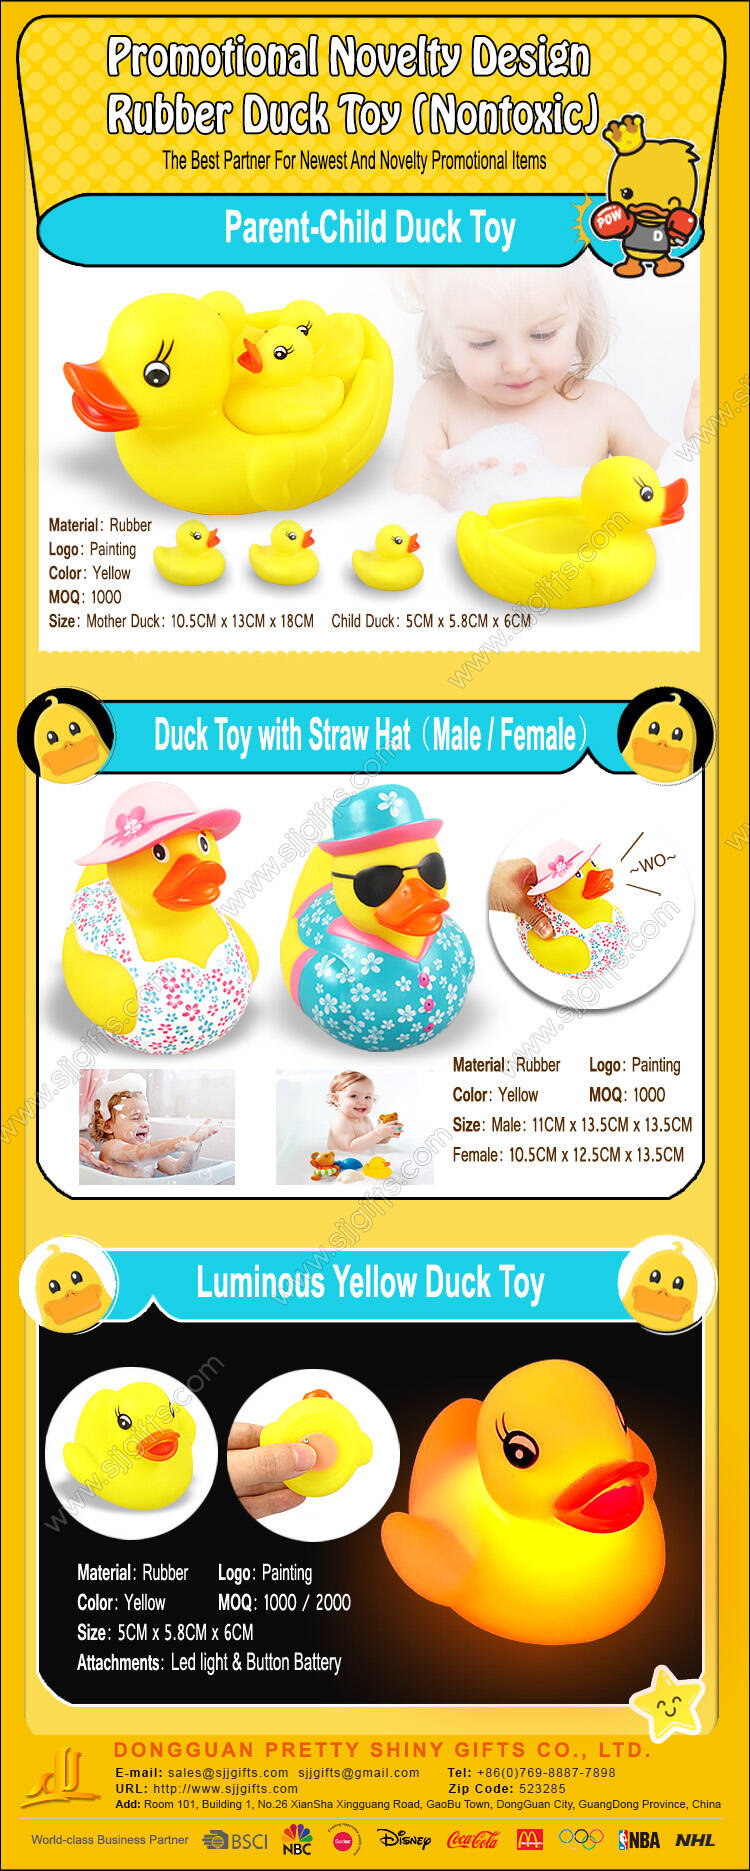 https://www.sjjgifts.com/uploads/Promotional-Novelty-Design-Rubber-Duck-Toy-Nontoxic.jpg